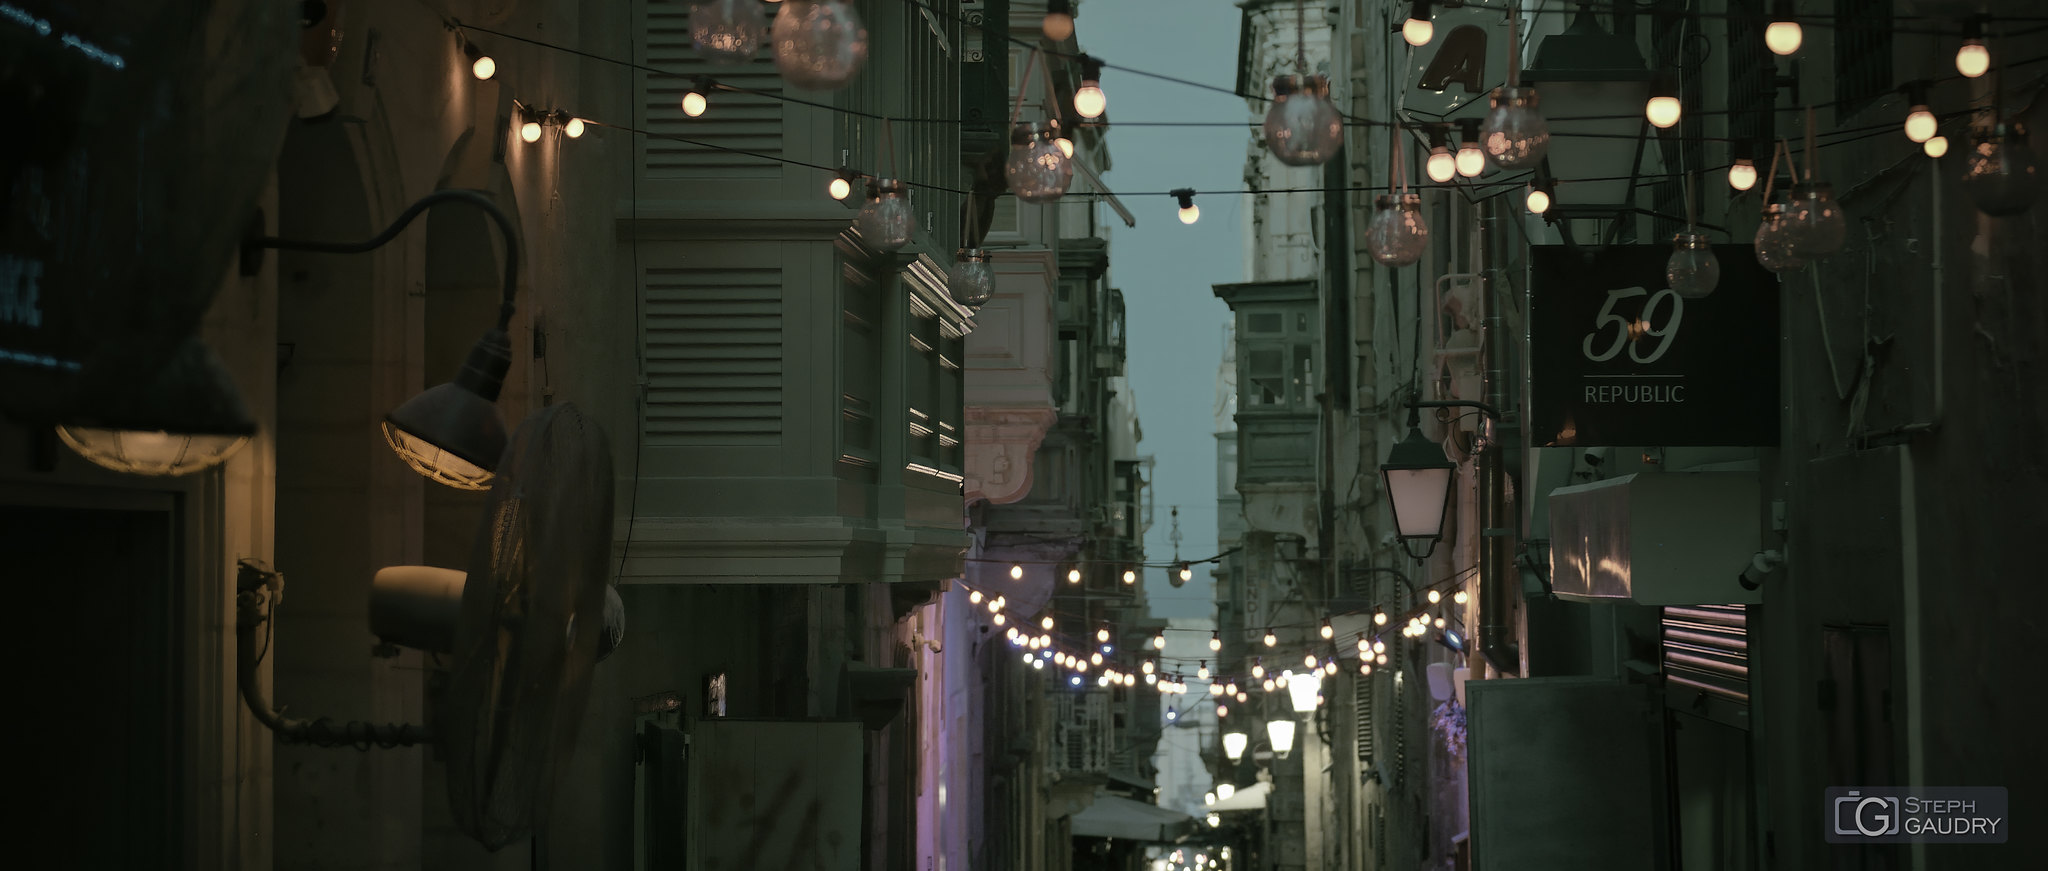 Lampions à Malte [Click to start slideshow]